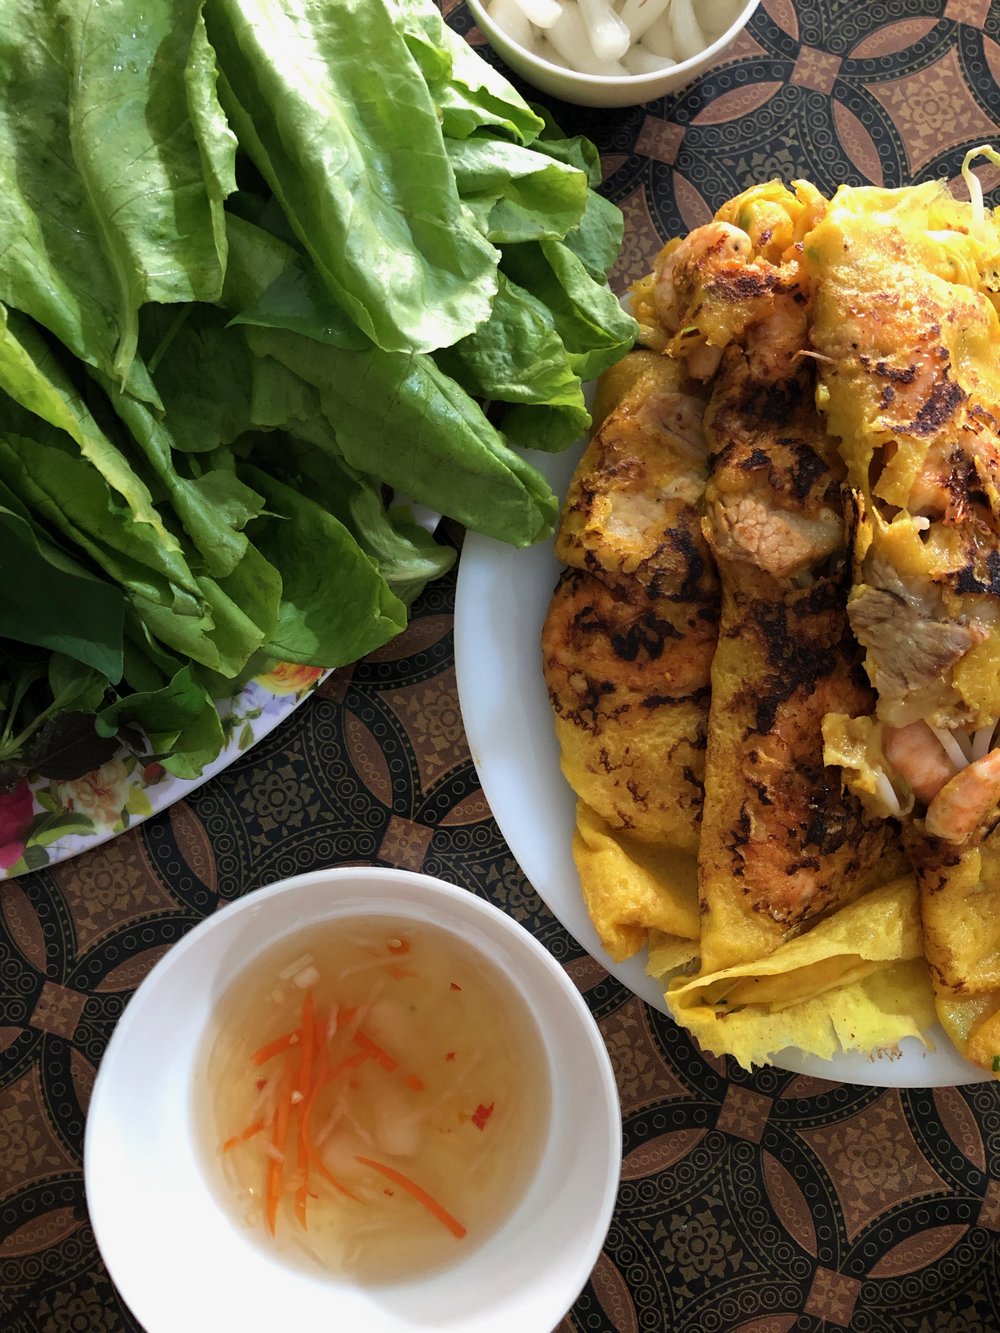  Banh Xeo - Savory Vietnamese Crepe 